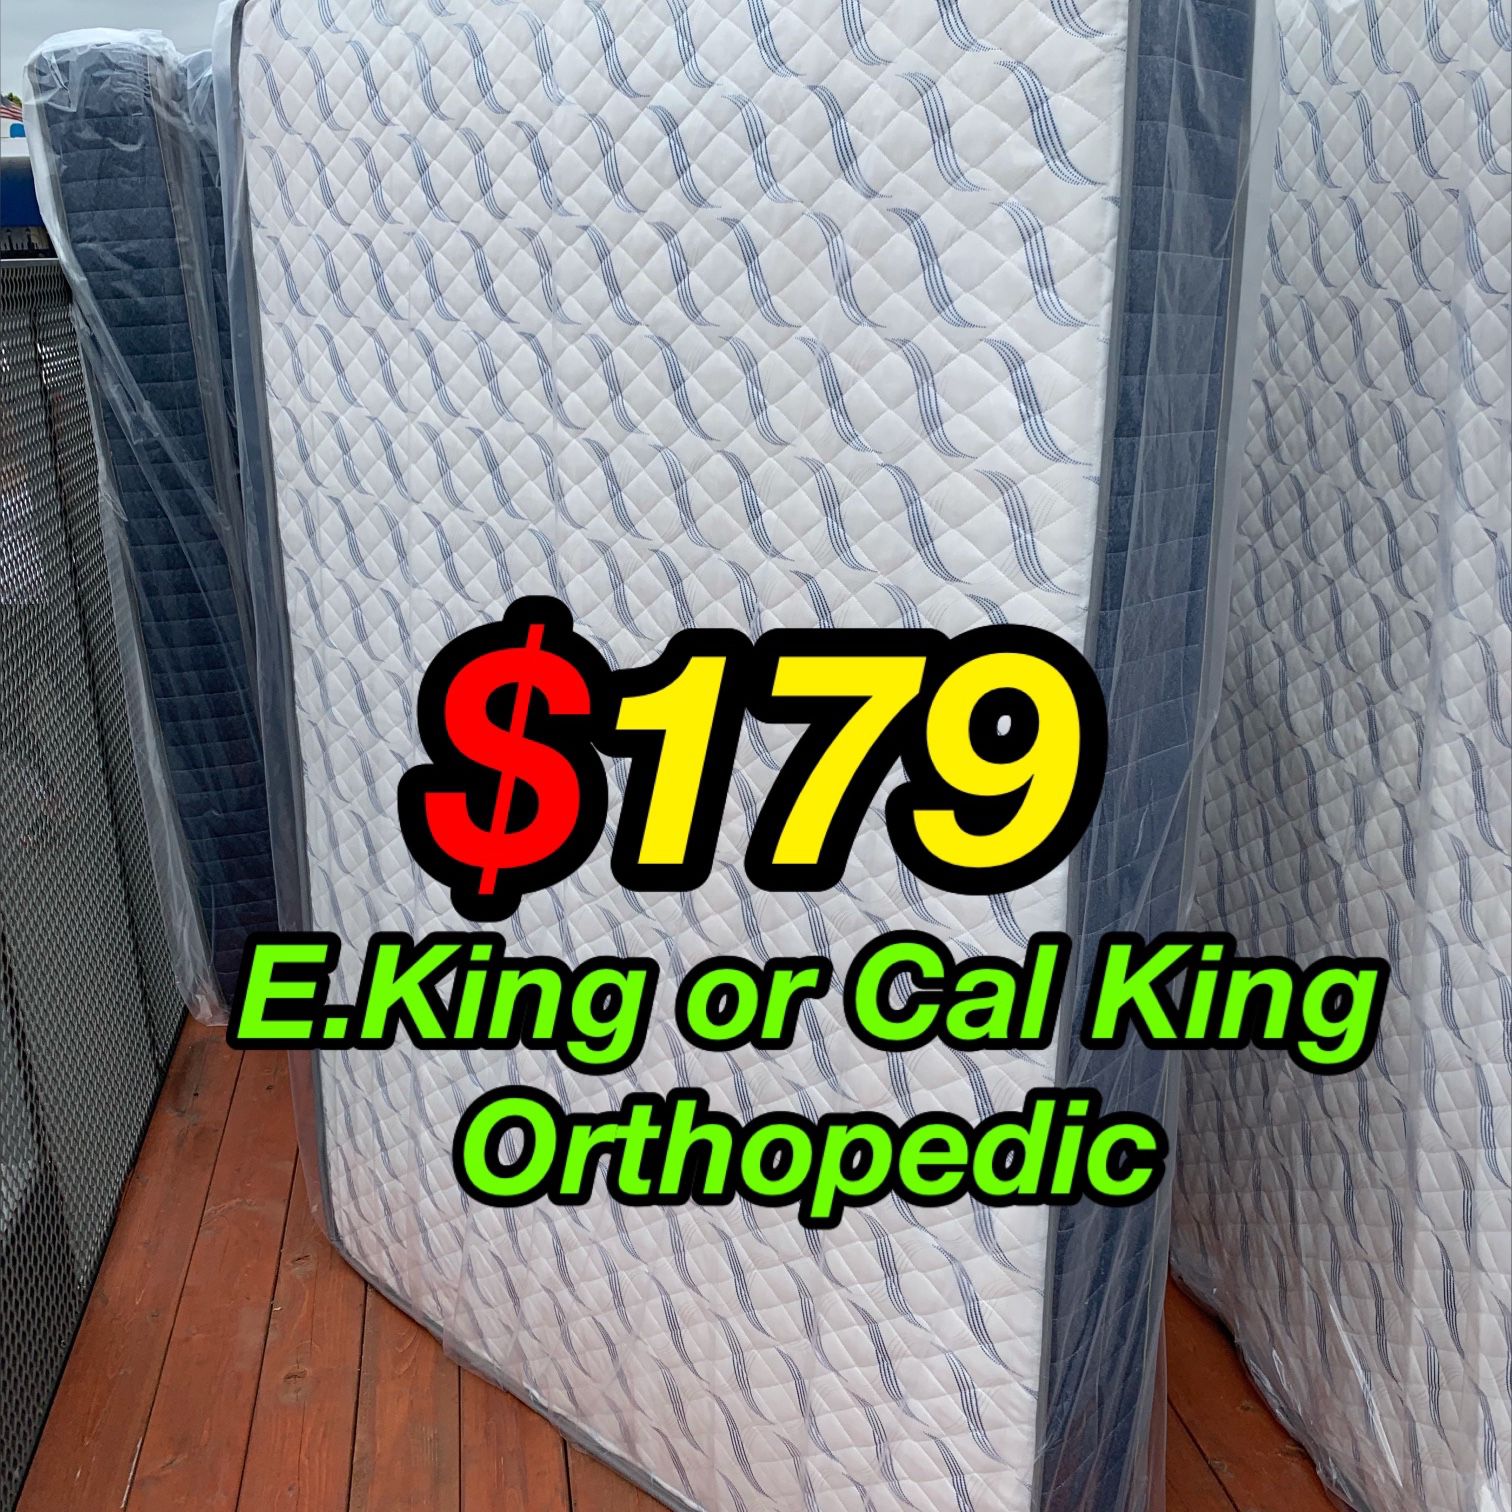 Cal King Supreme Orthopedic Mattress 